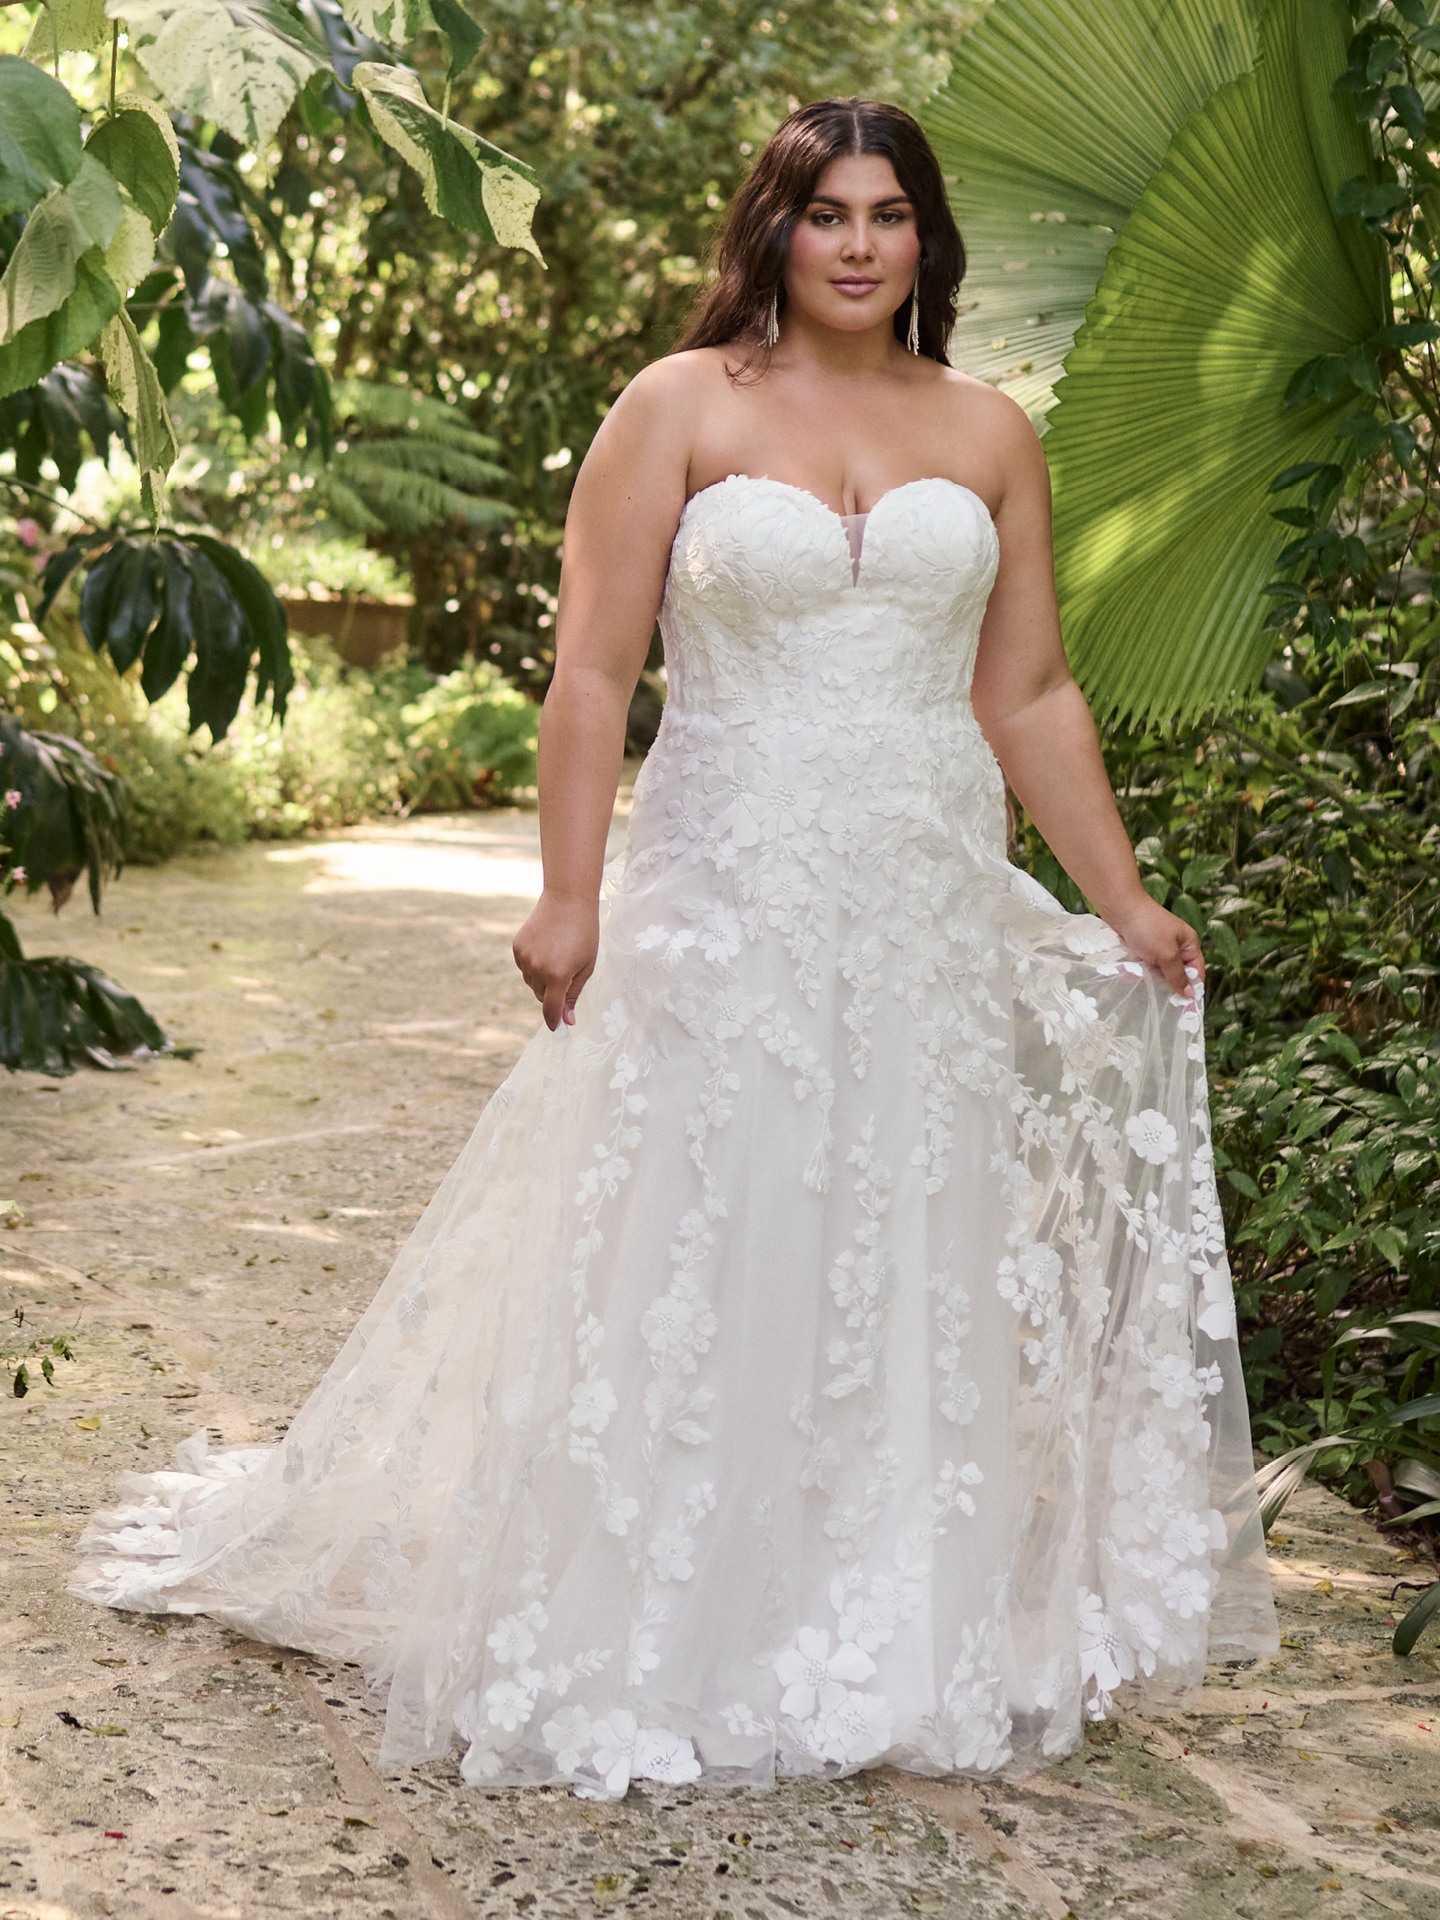 Lace Rhinestone Mid Sleeve Plus Size Wedding Gown - OneSimpleGown.com